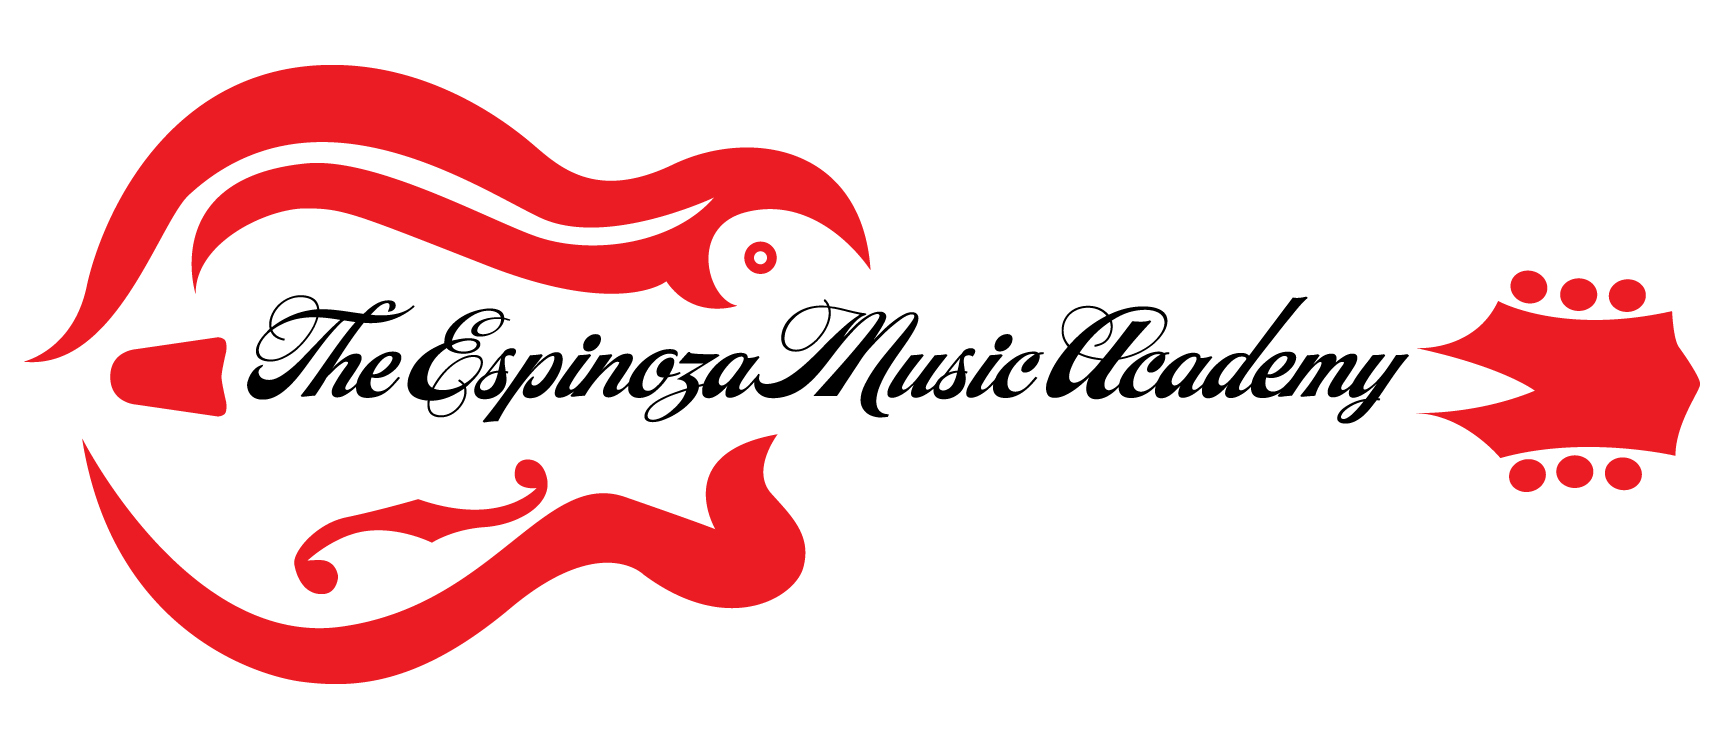 Espinoza Music Academy